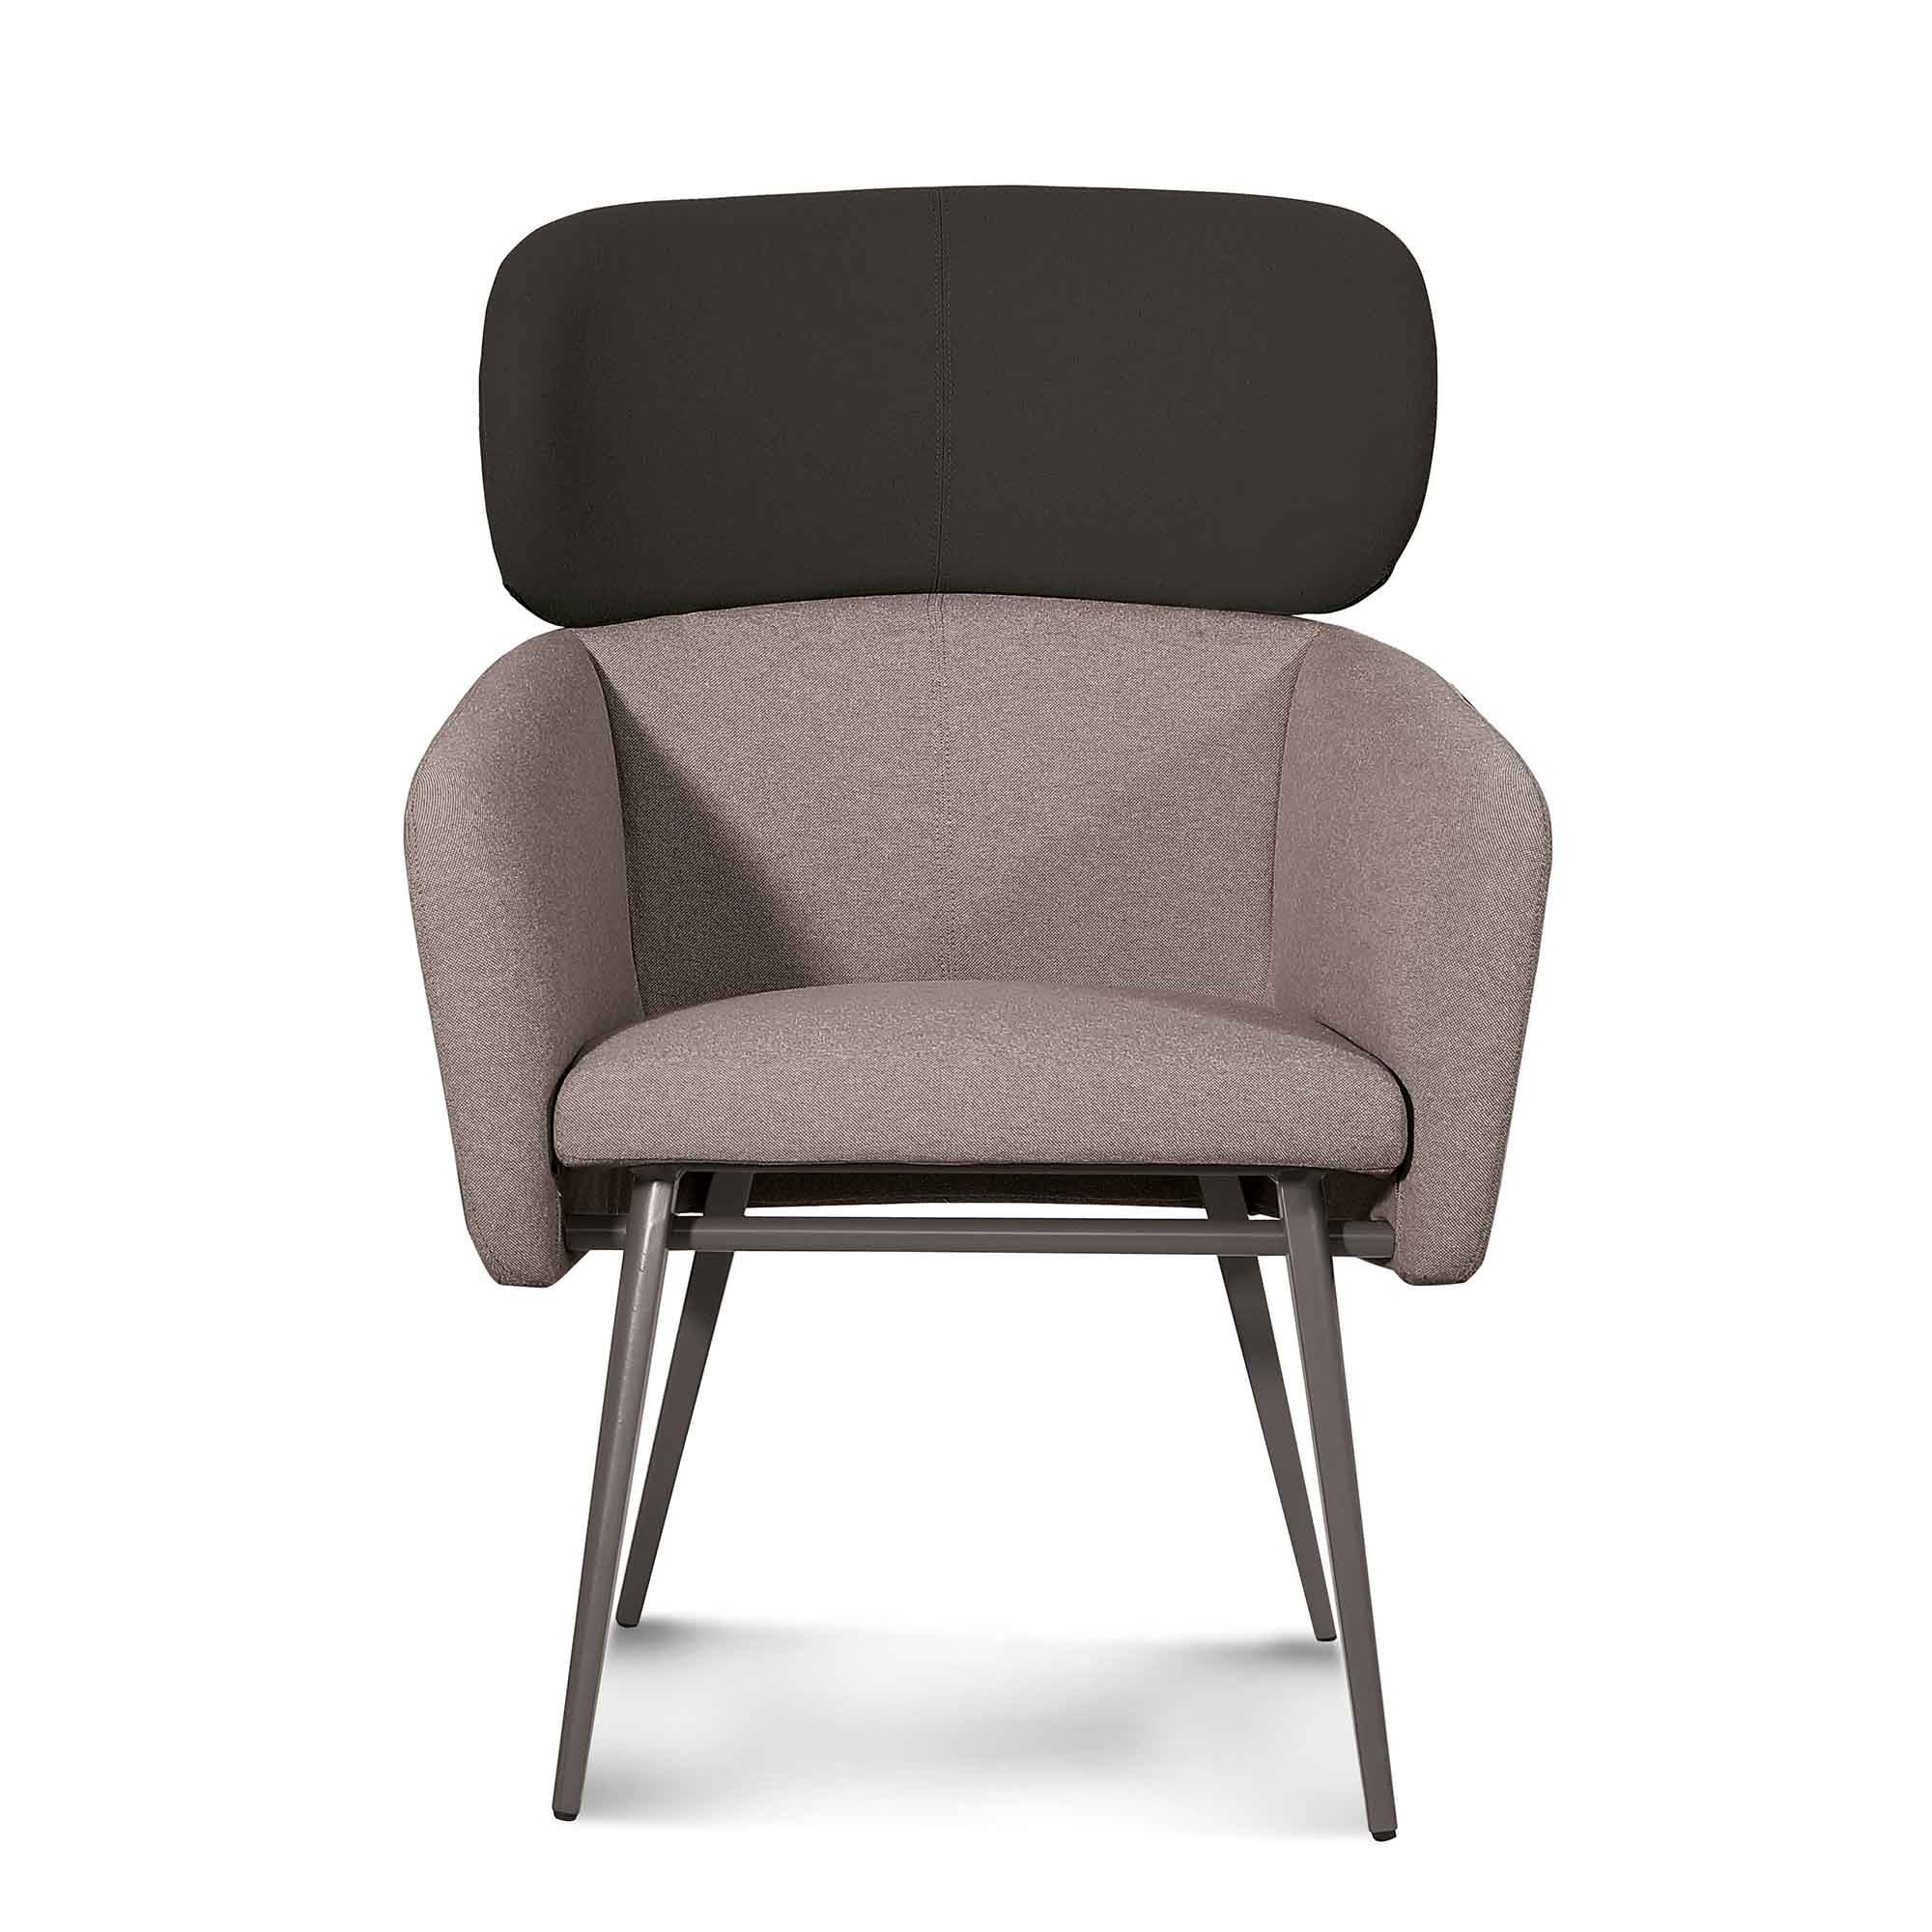 BALU XL MET Armchair black and grey upholstery